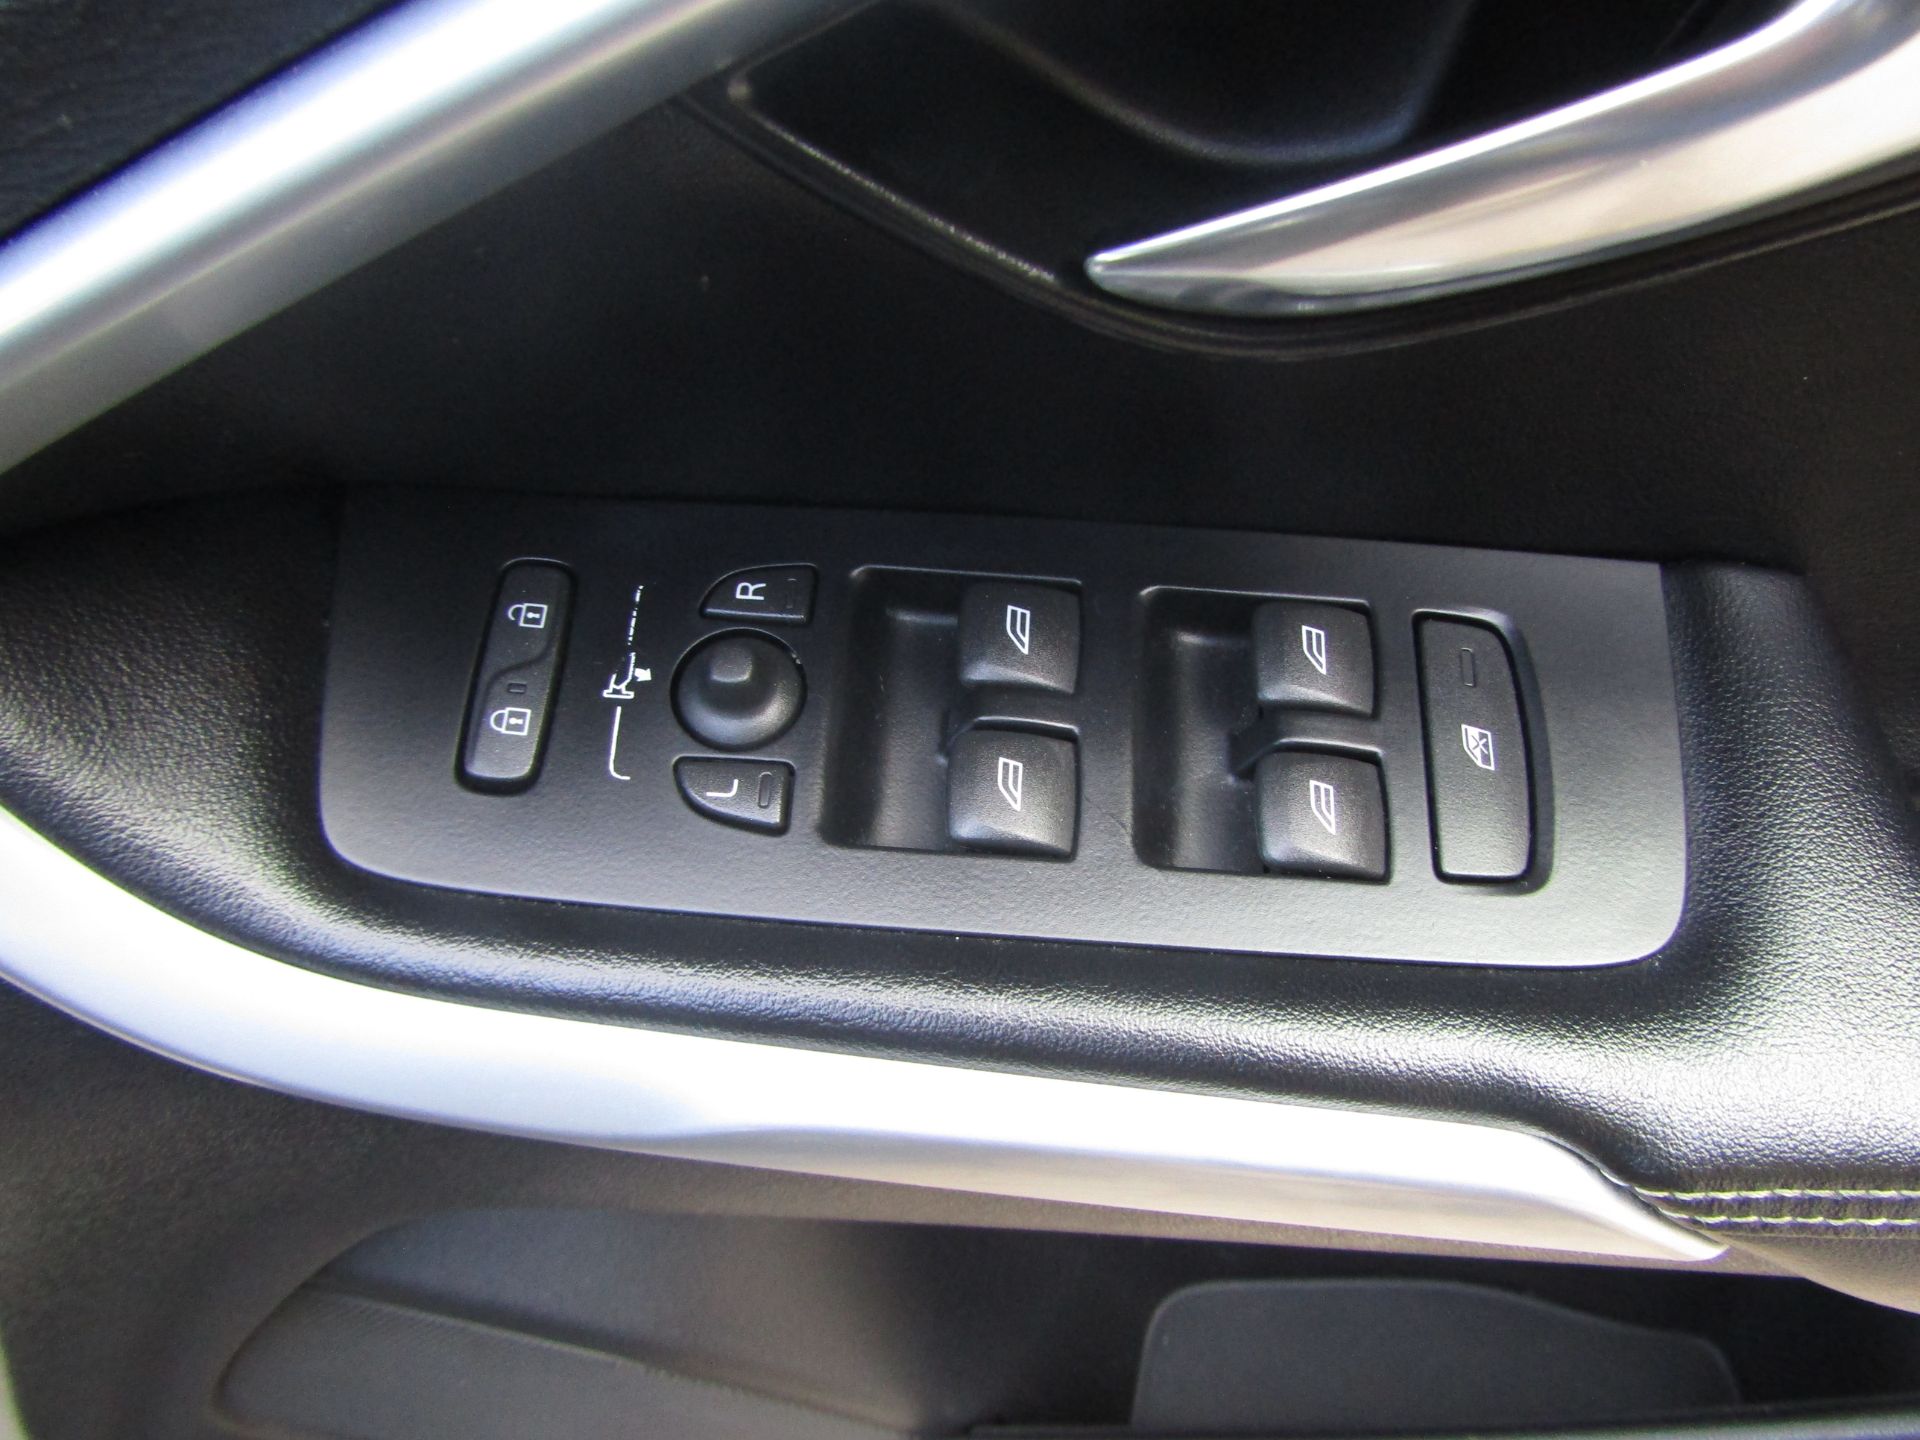 2014 Volvo V40 Nav D2 R design, 60531 miles (unchecked) MOT until 30/1/2024 has 2 keys, feature - Image 11 of 23